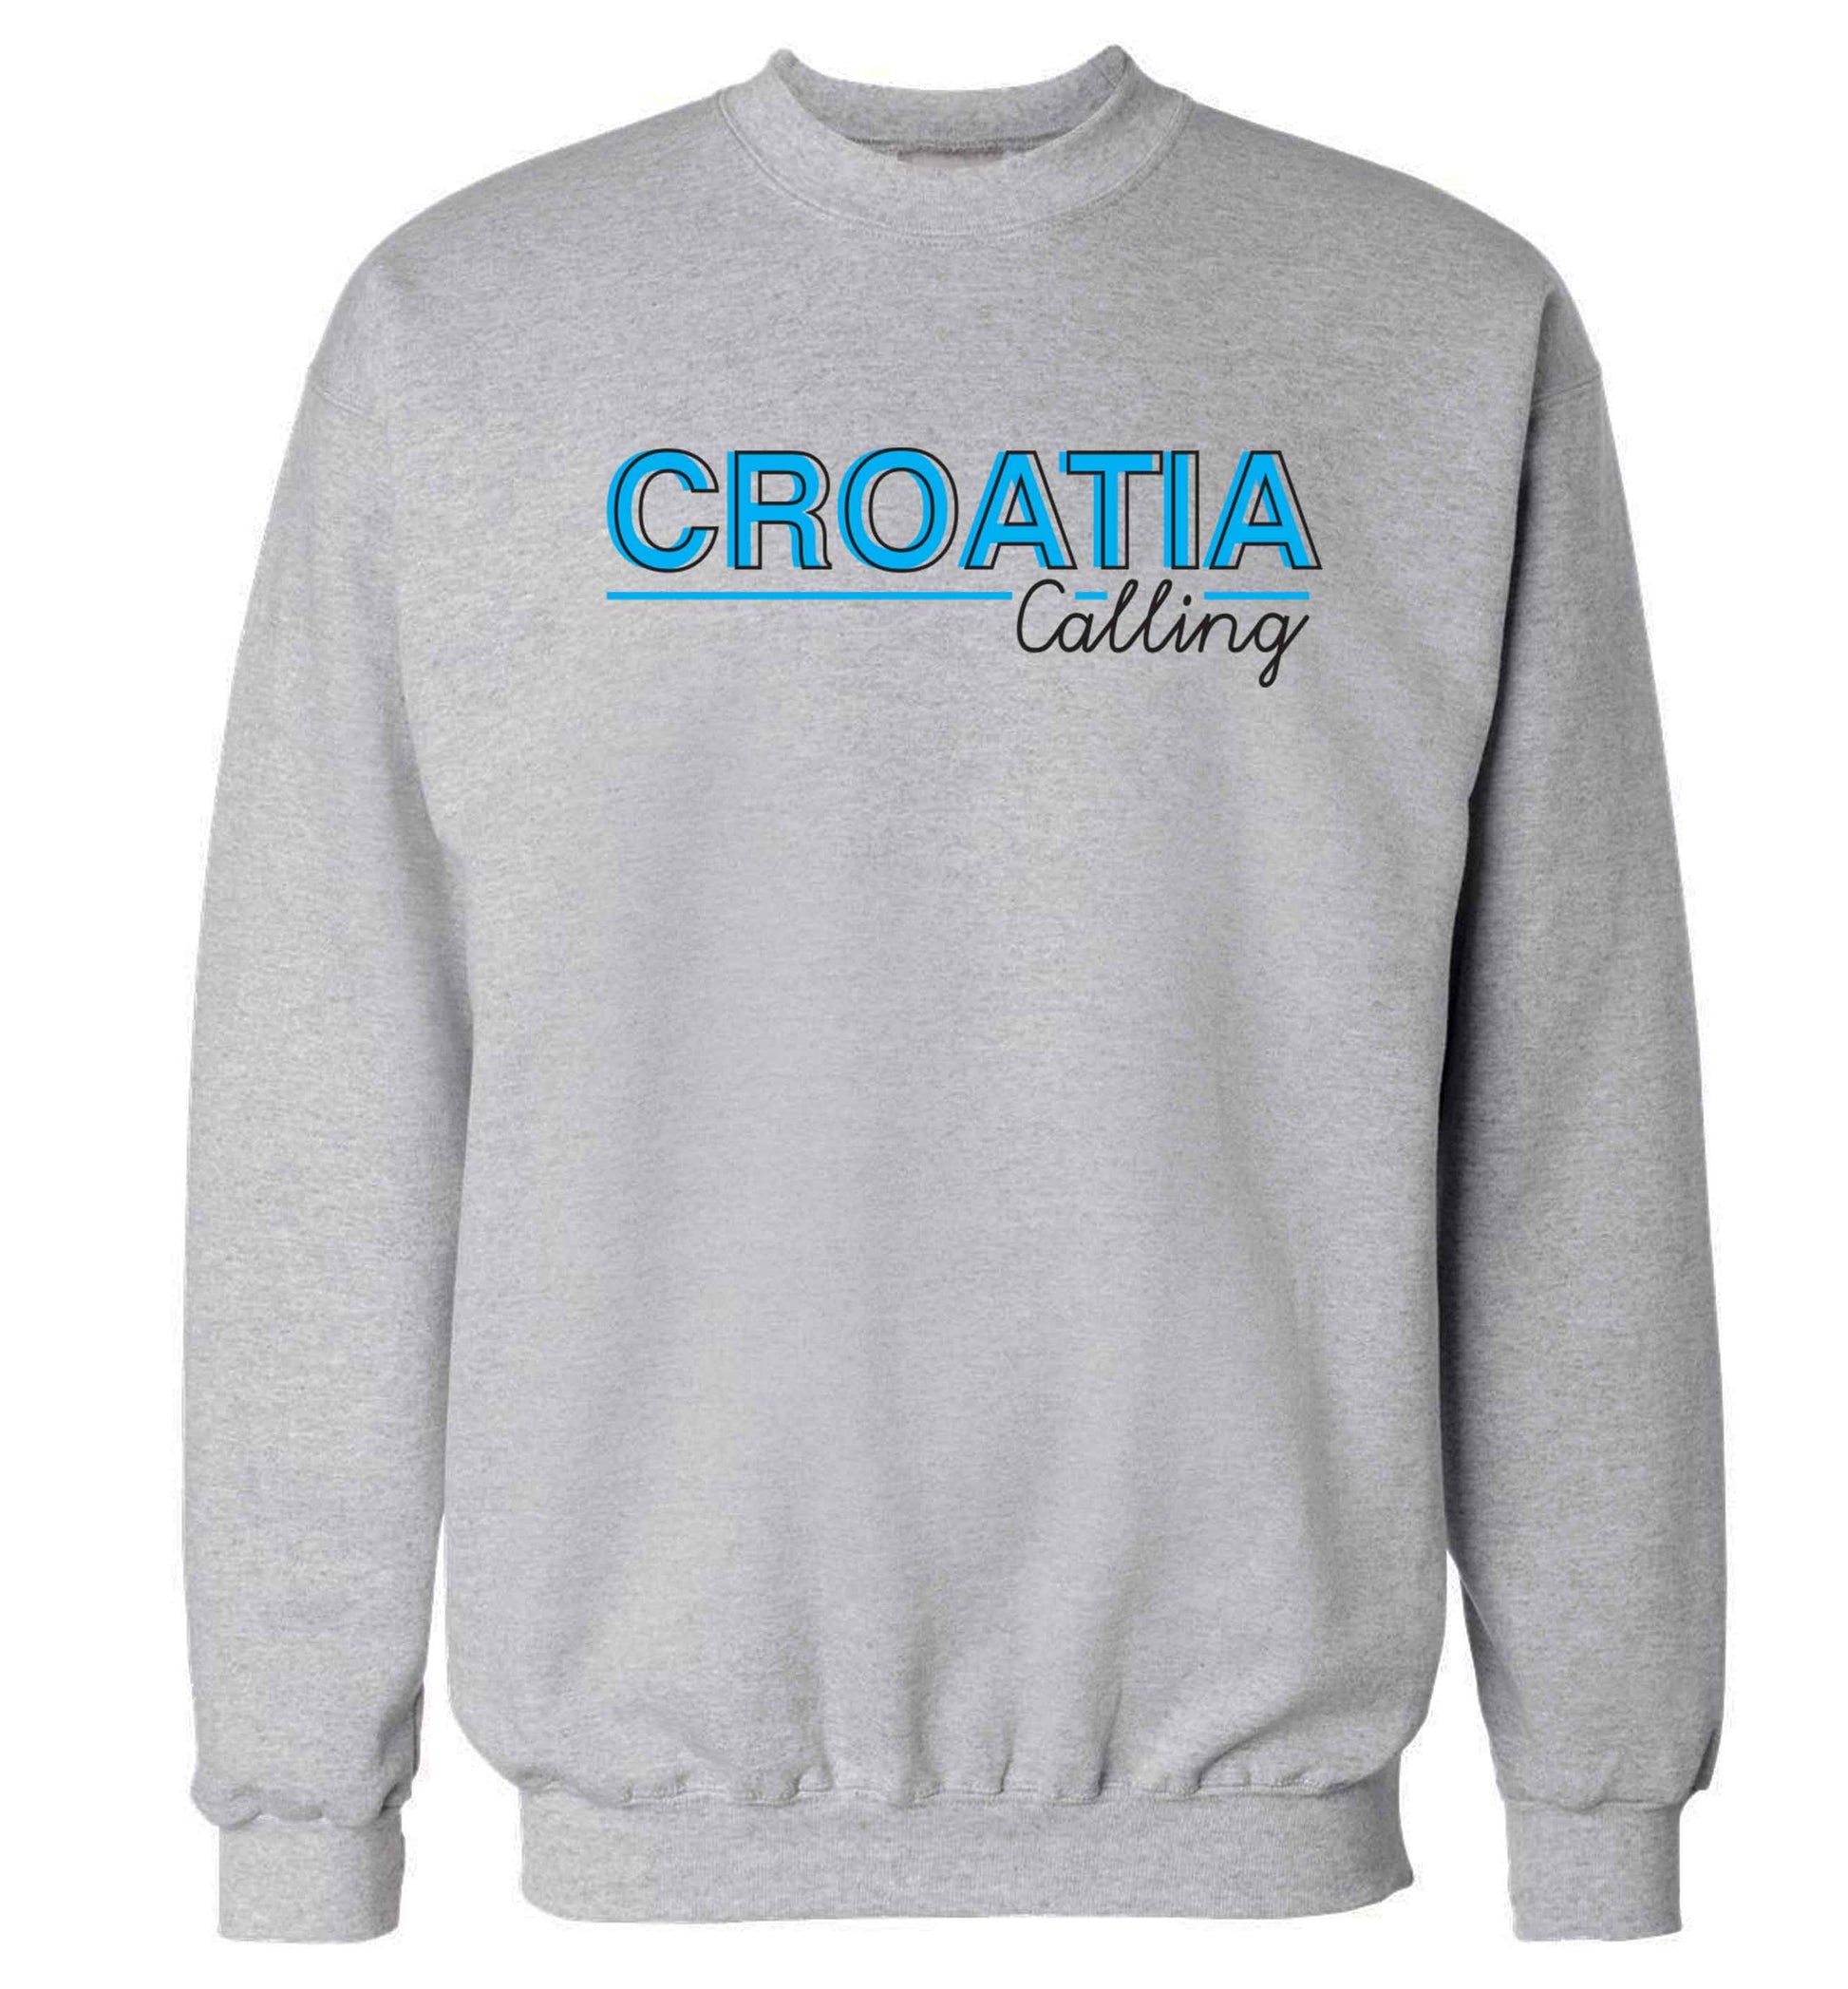 Croatia calling Adult's unisex grey Sweater 2XL